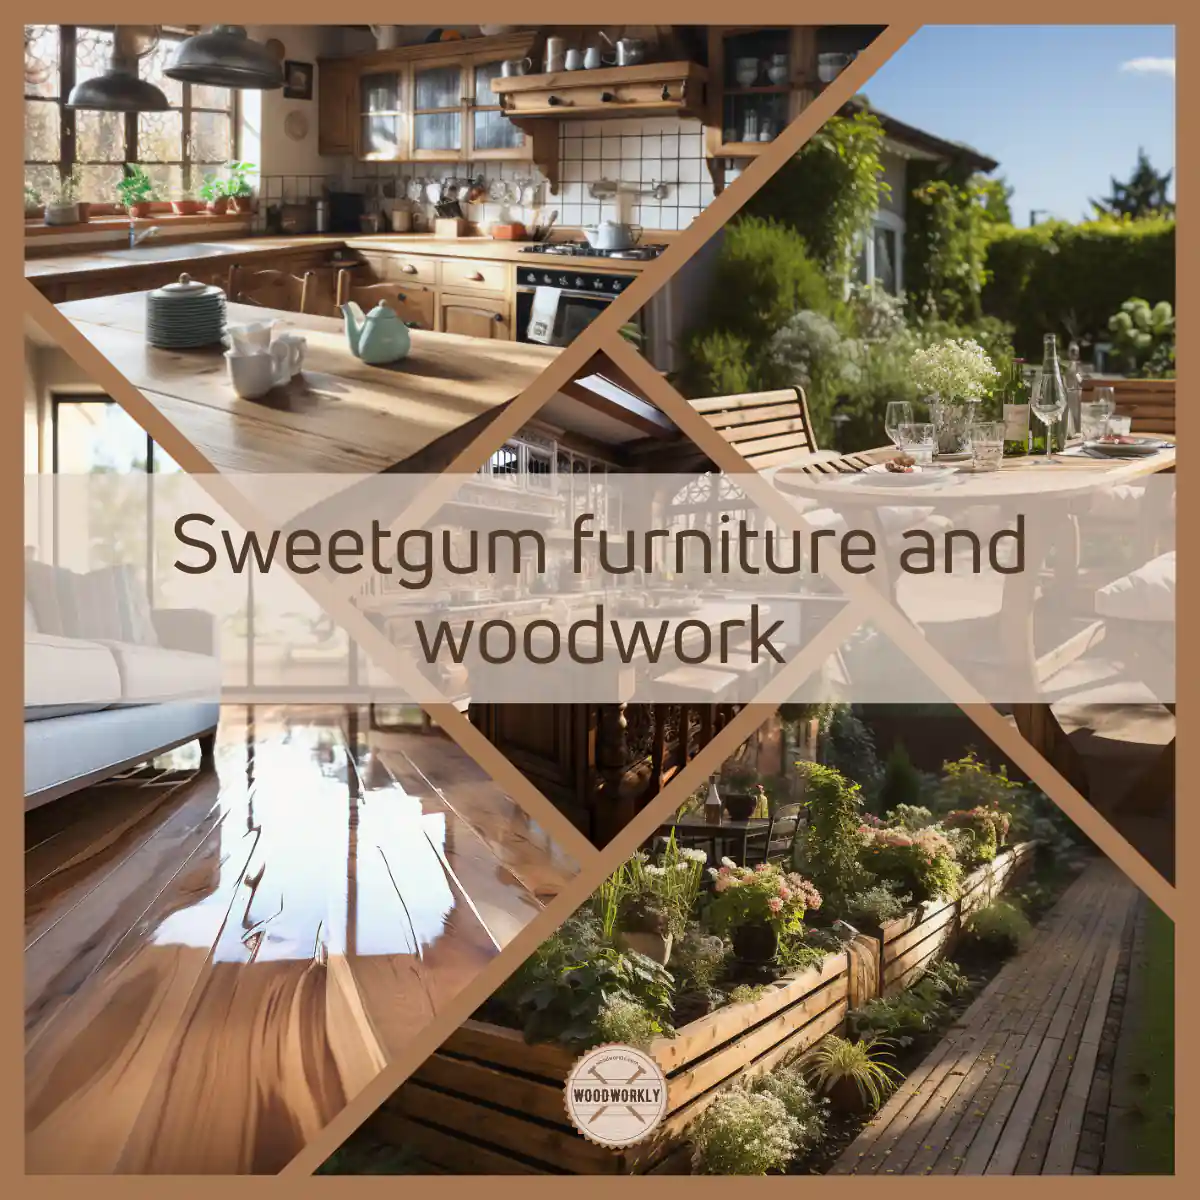 Sweetgum furniture and woodwork